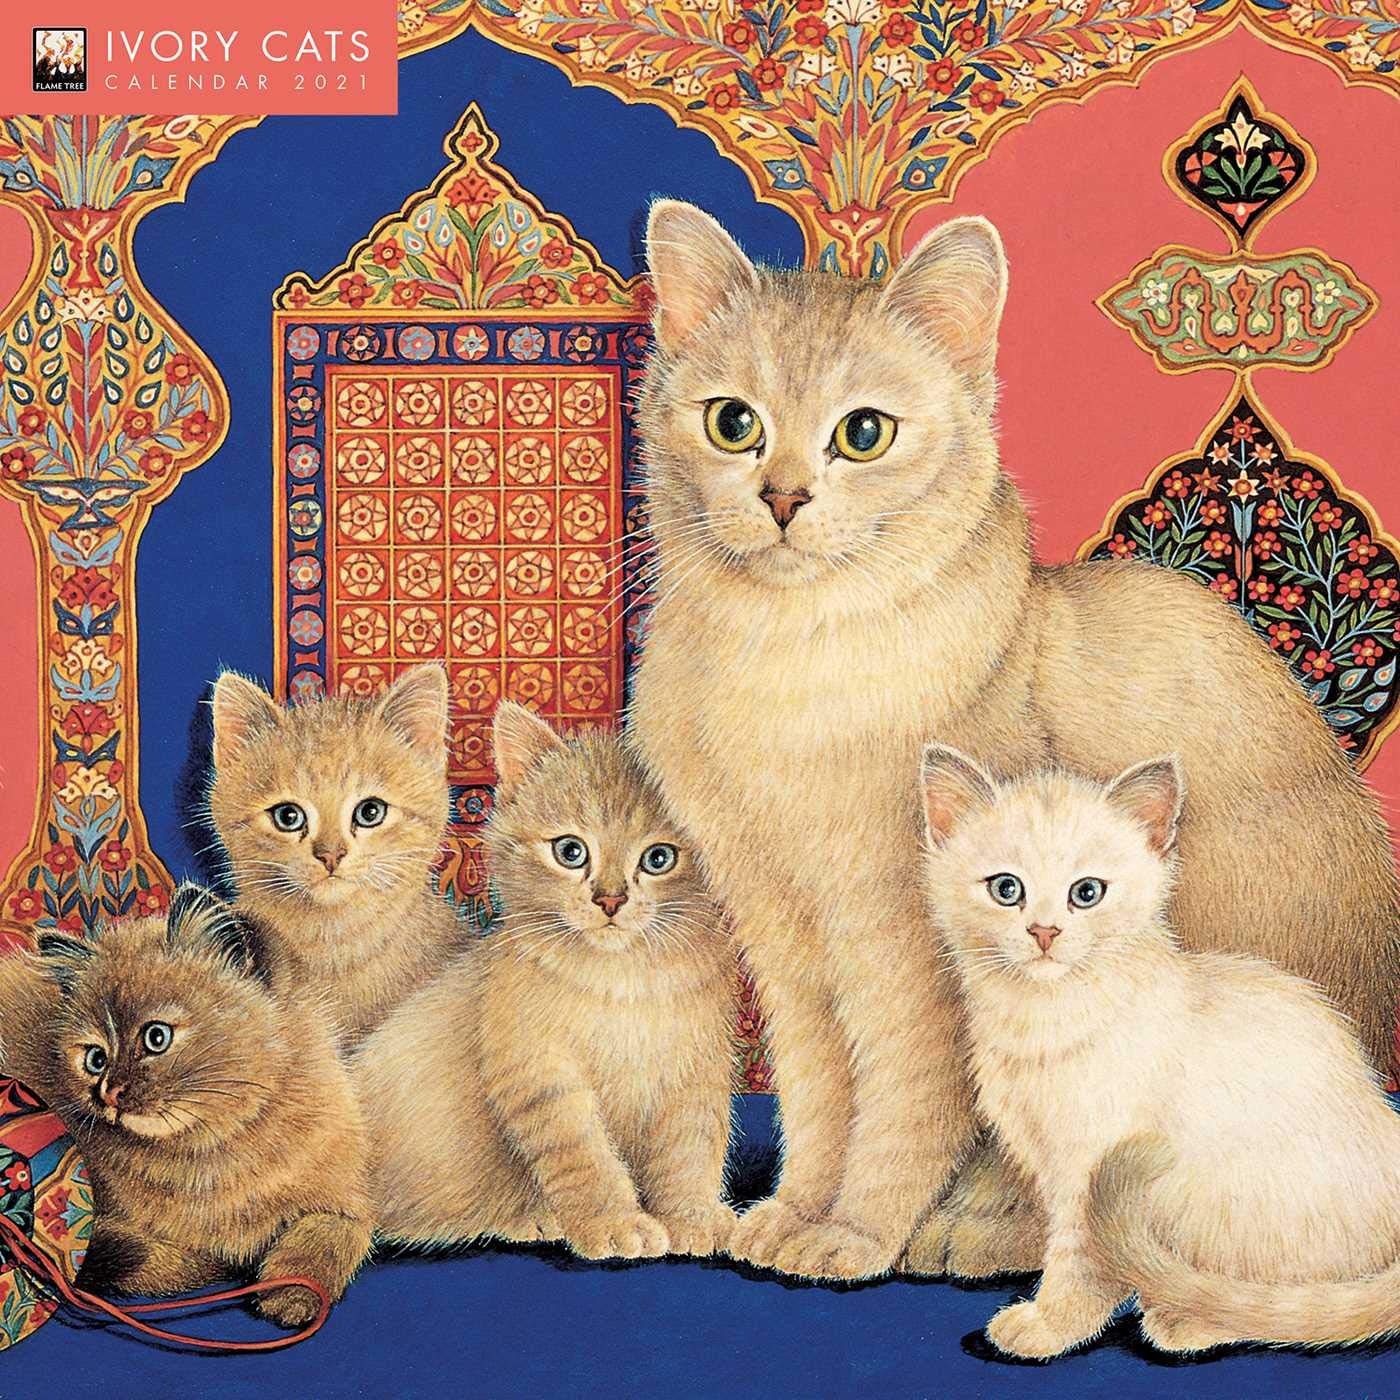 Calendar 2021 - Ivory Cats | Flame Tree Publishing